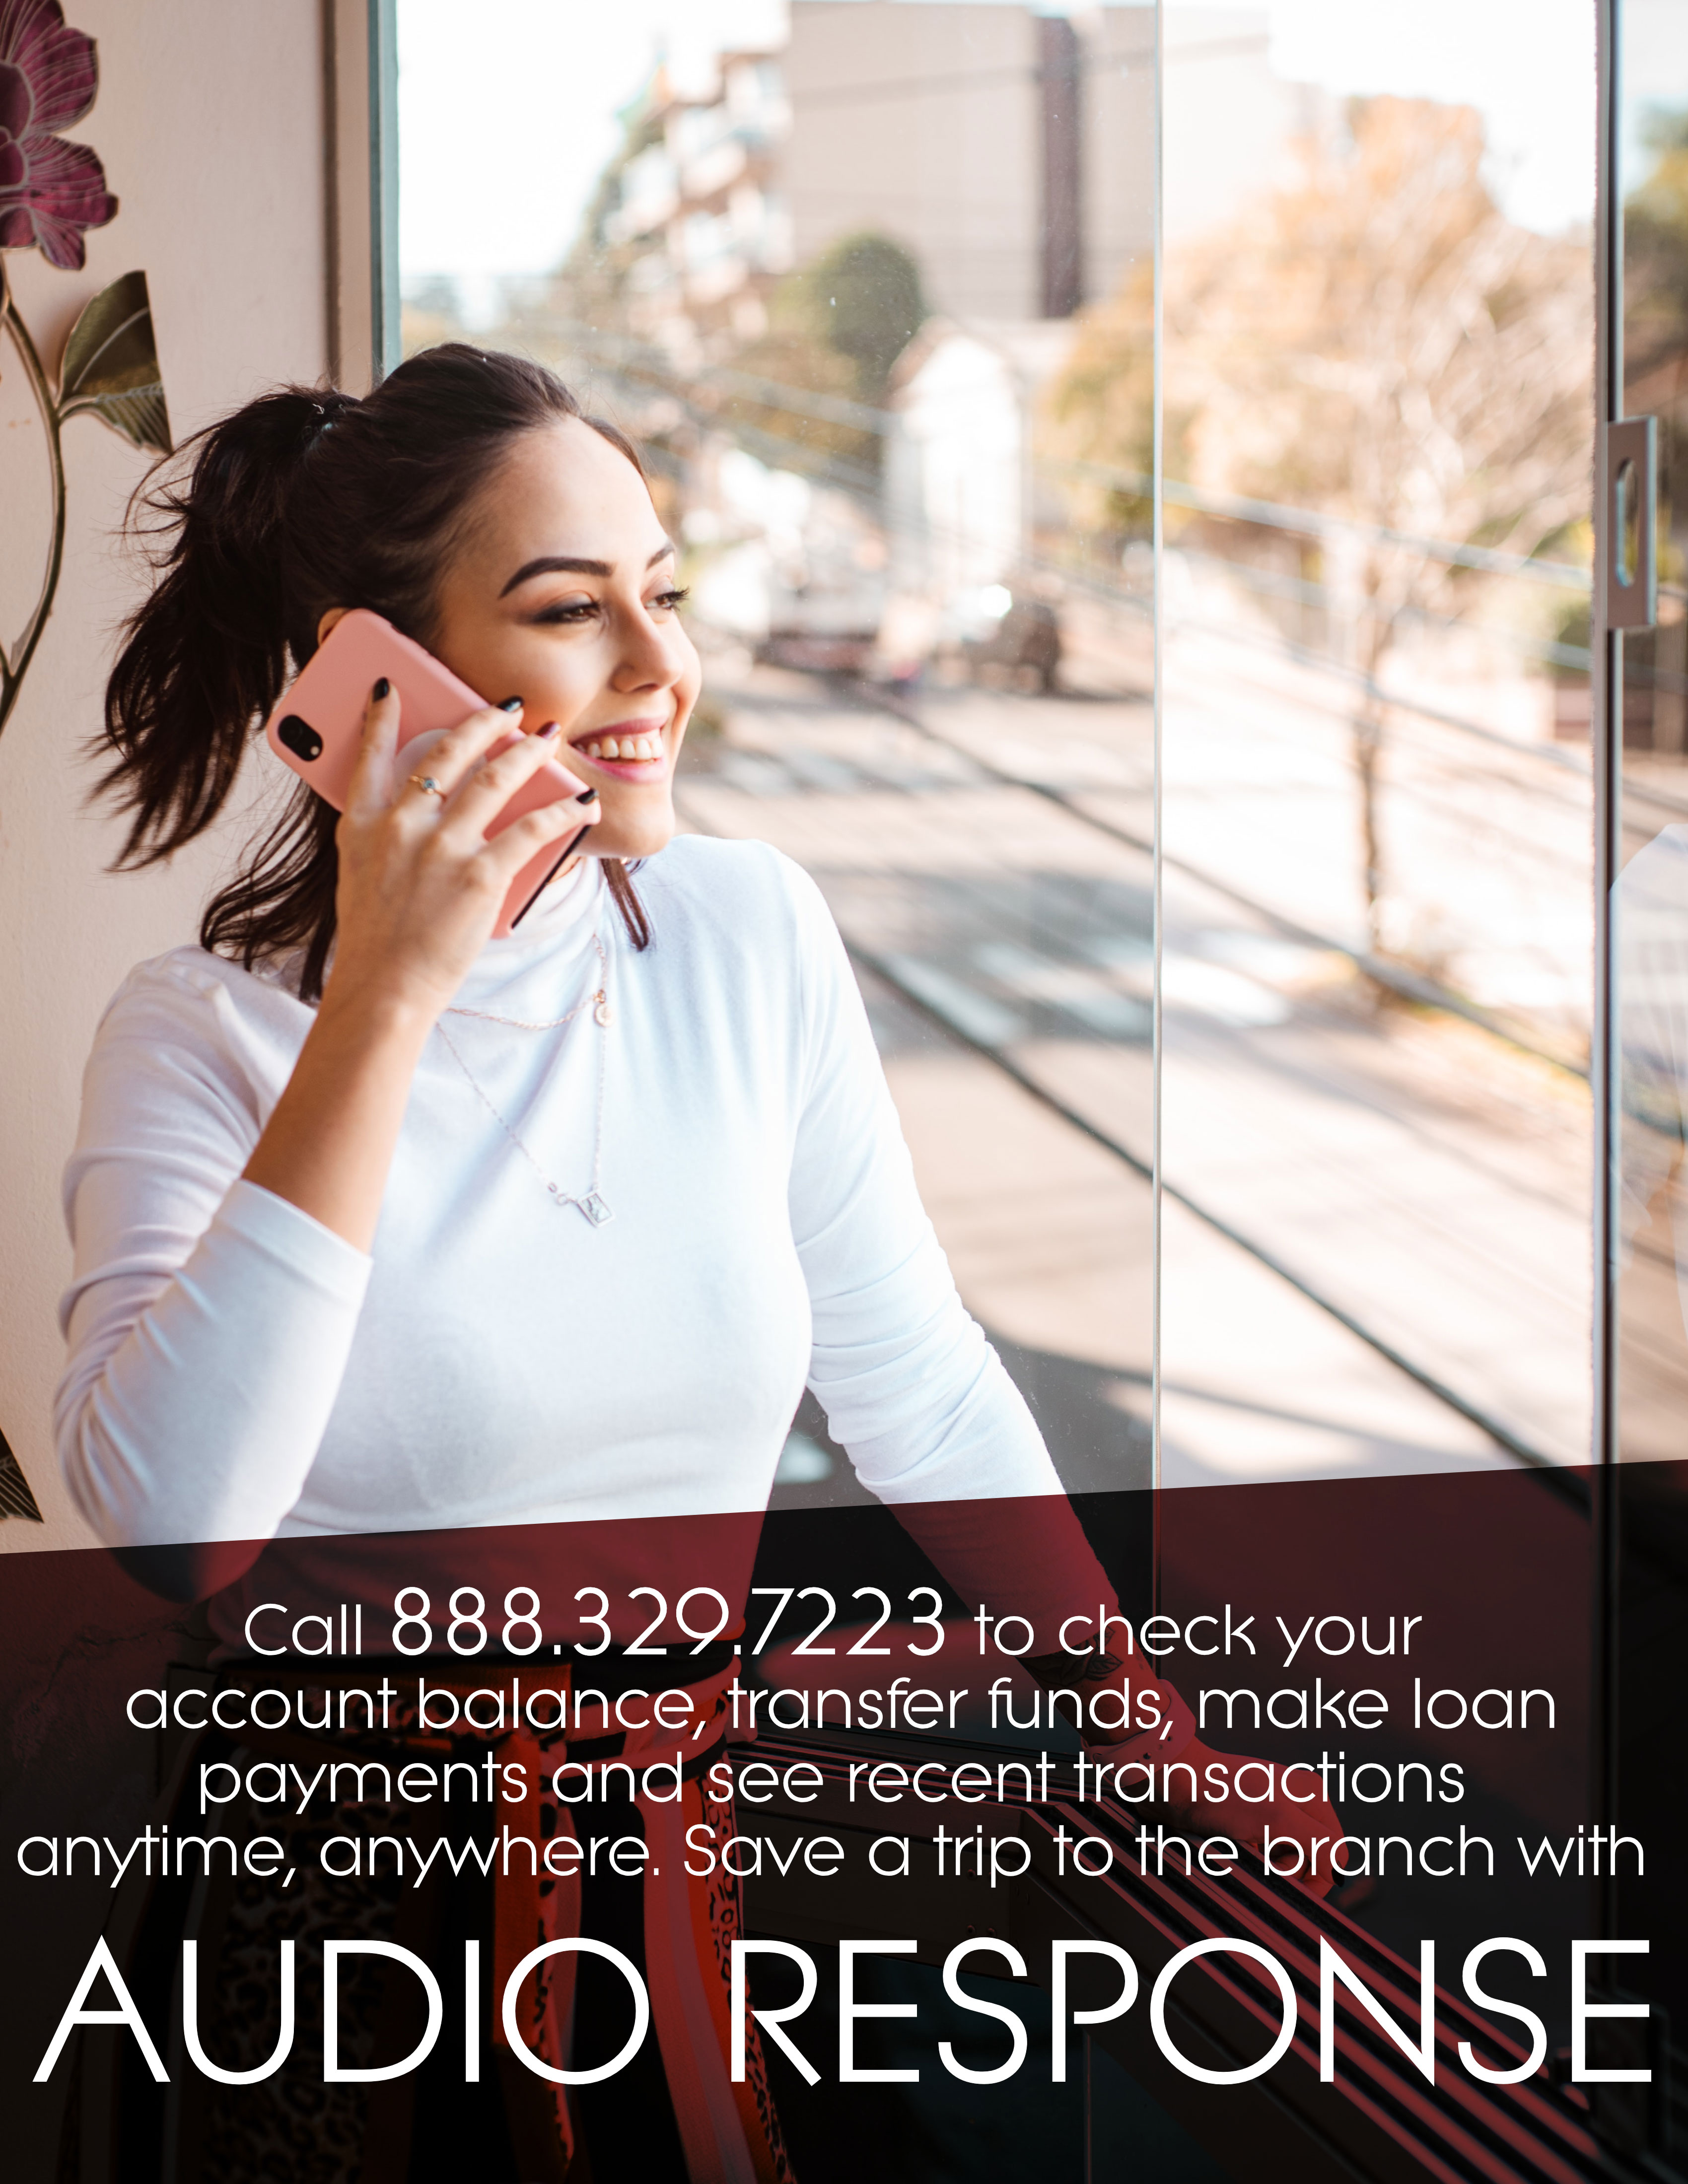 Audio Response banking call 888-329-7223